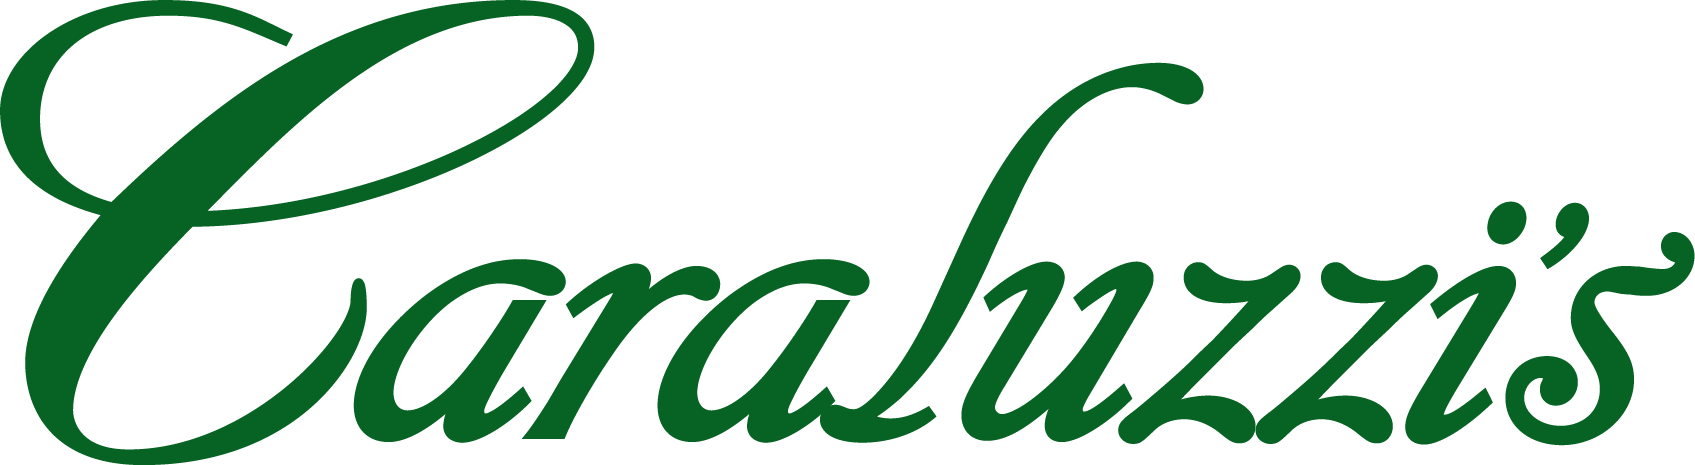 Caraluzzi's Logo